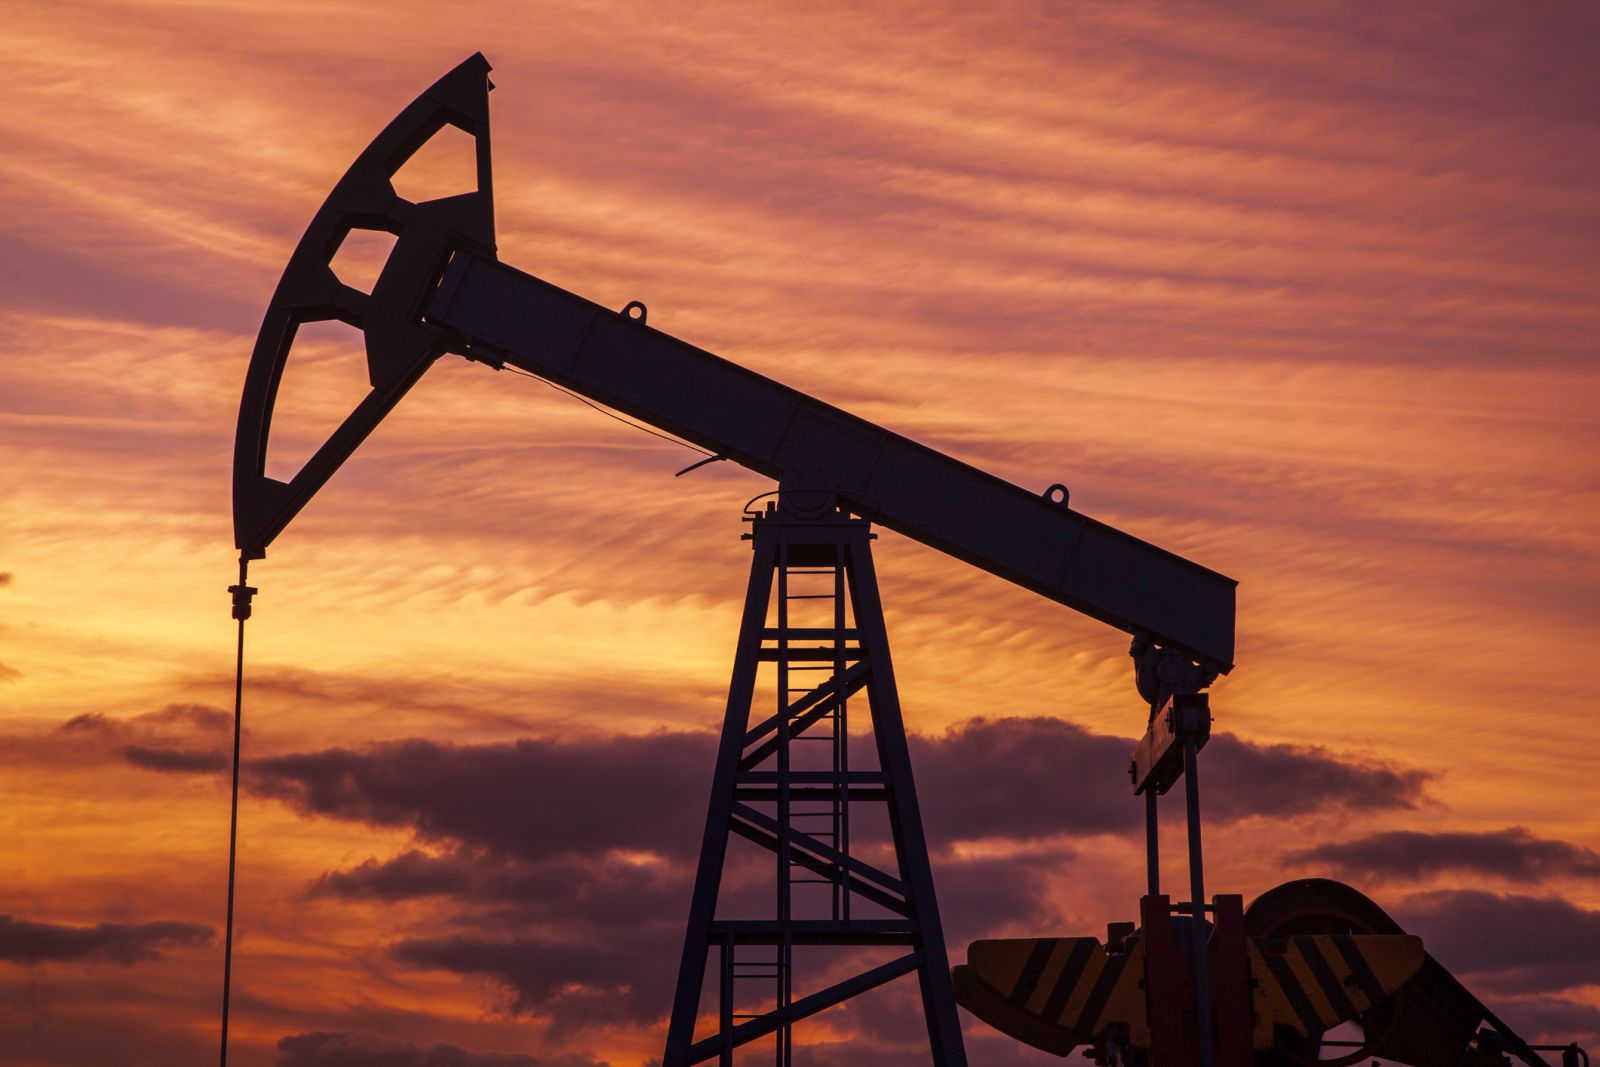 Oil - Oil jackpump at sunset 2 by Evgenii Mitroshin via iStock